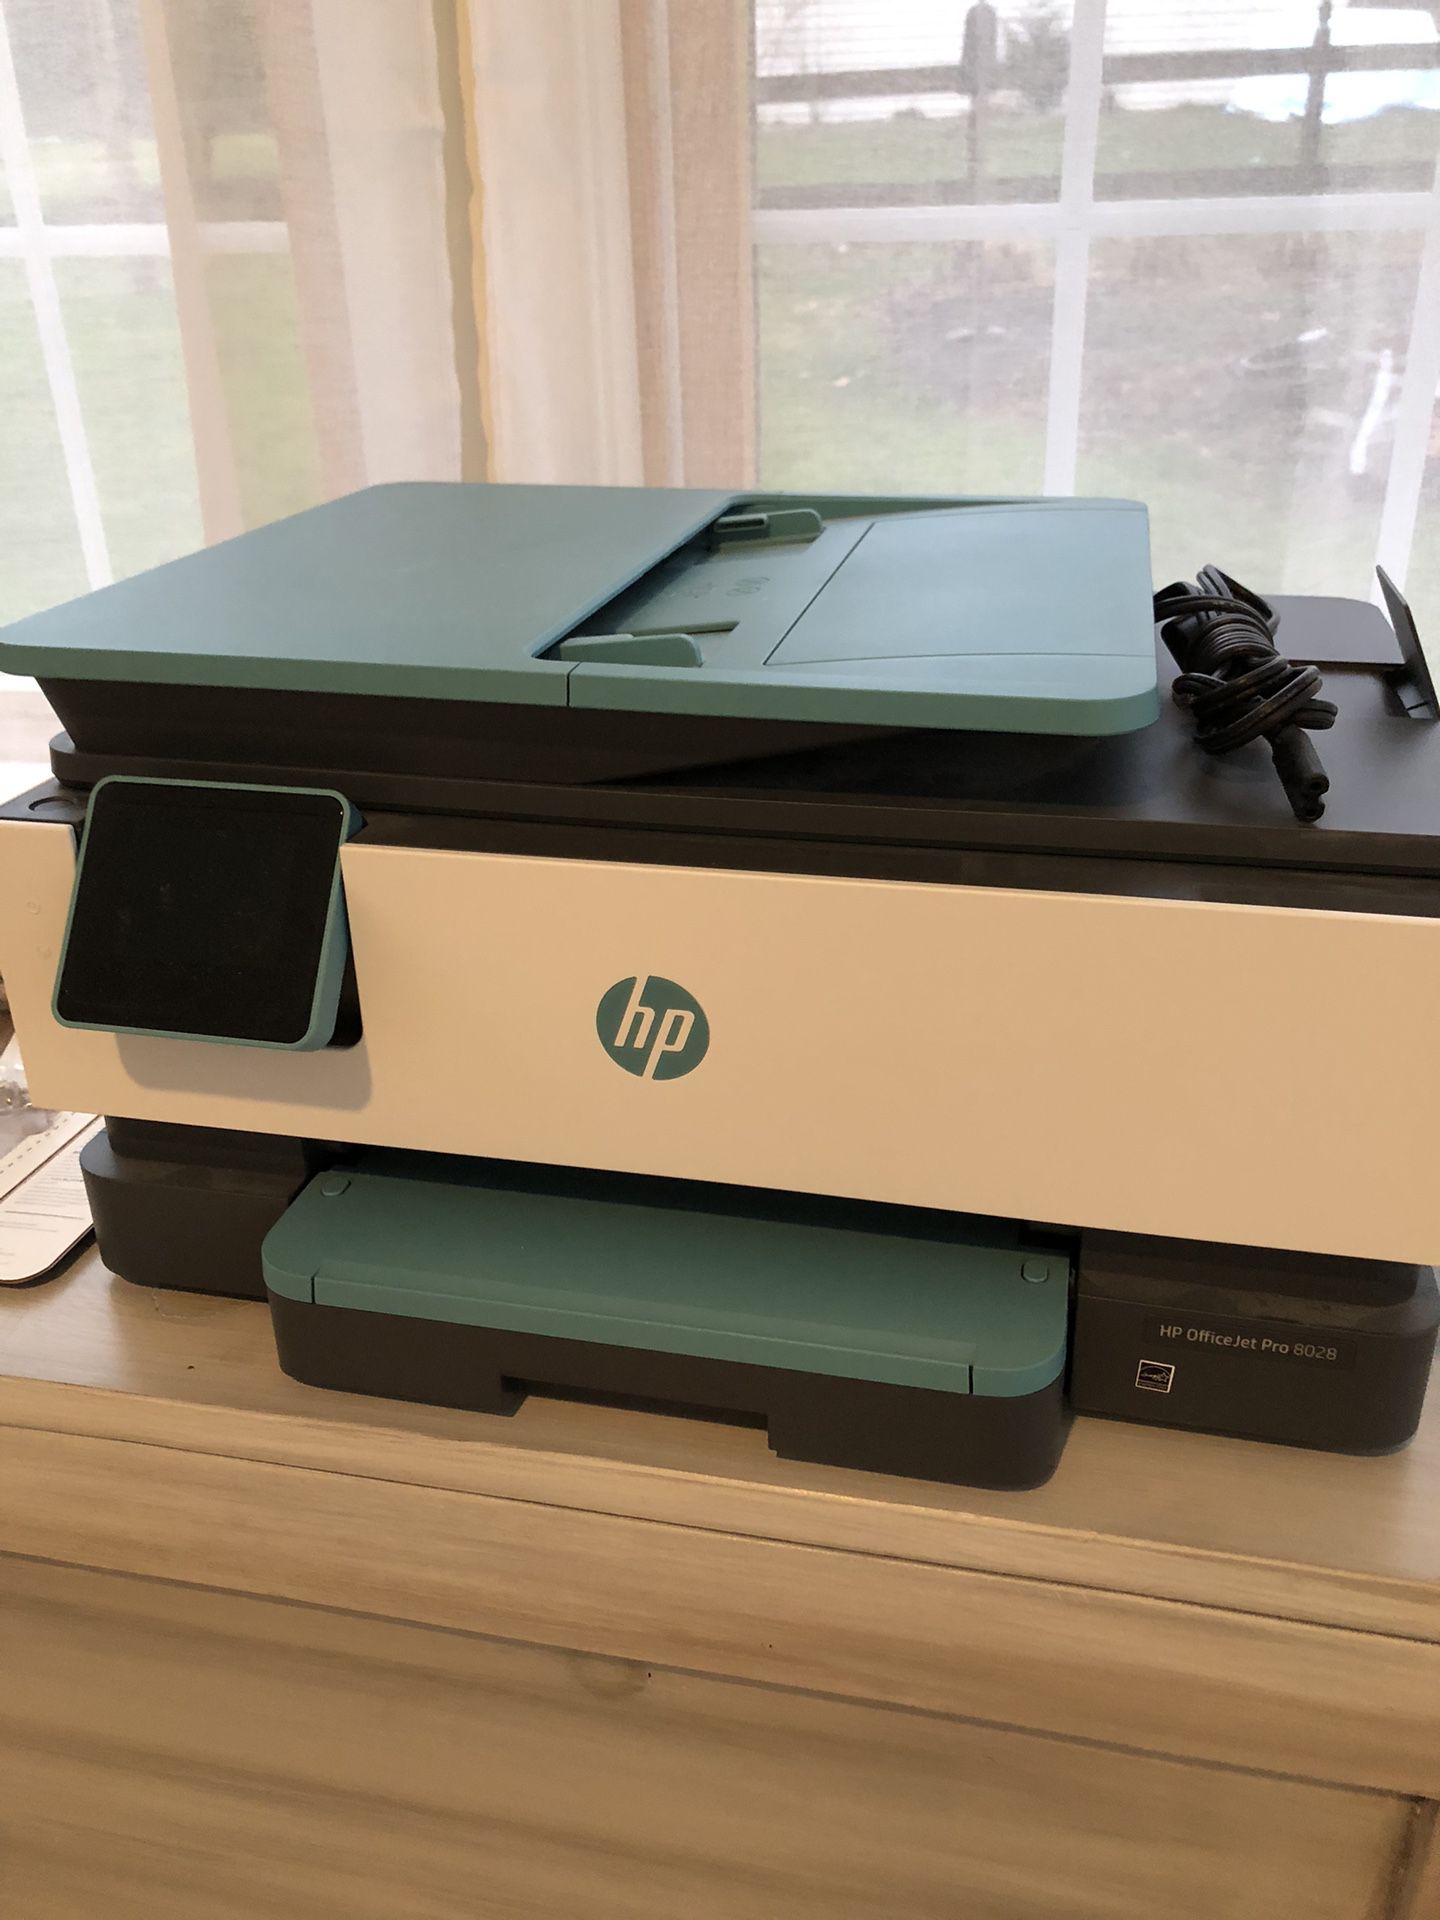 P Office Jet Pro Printer, scanner